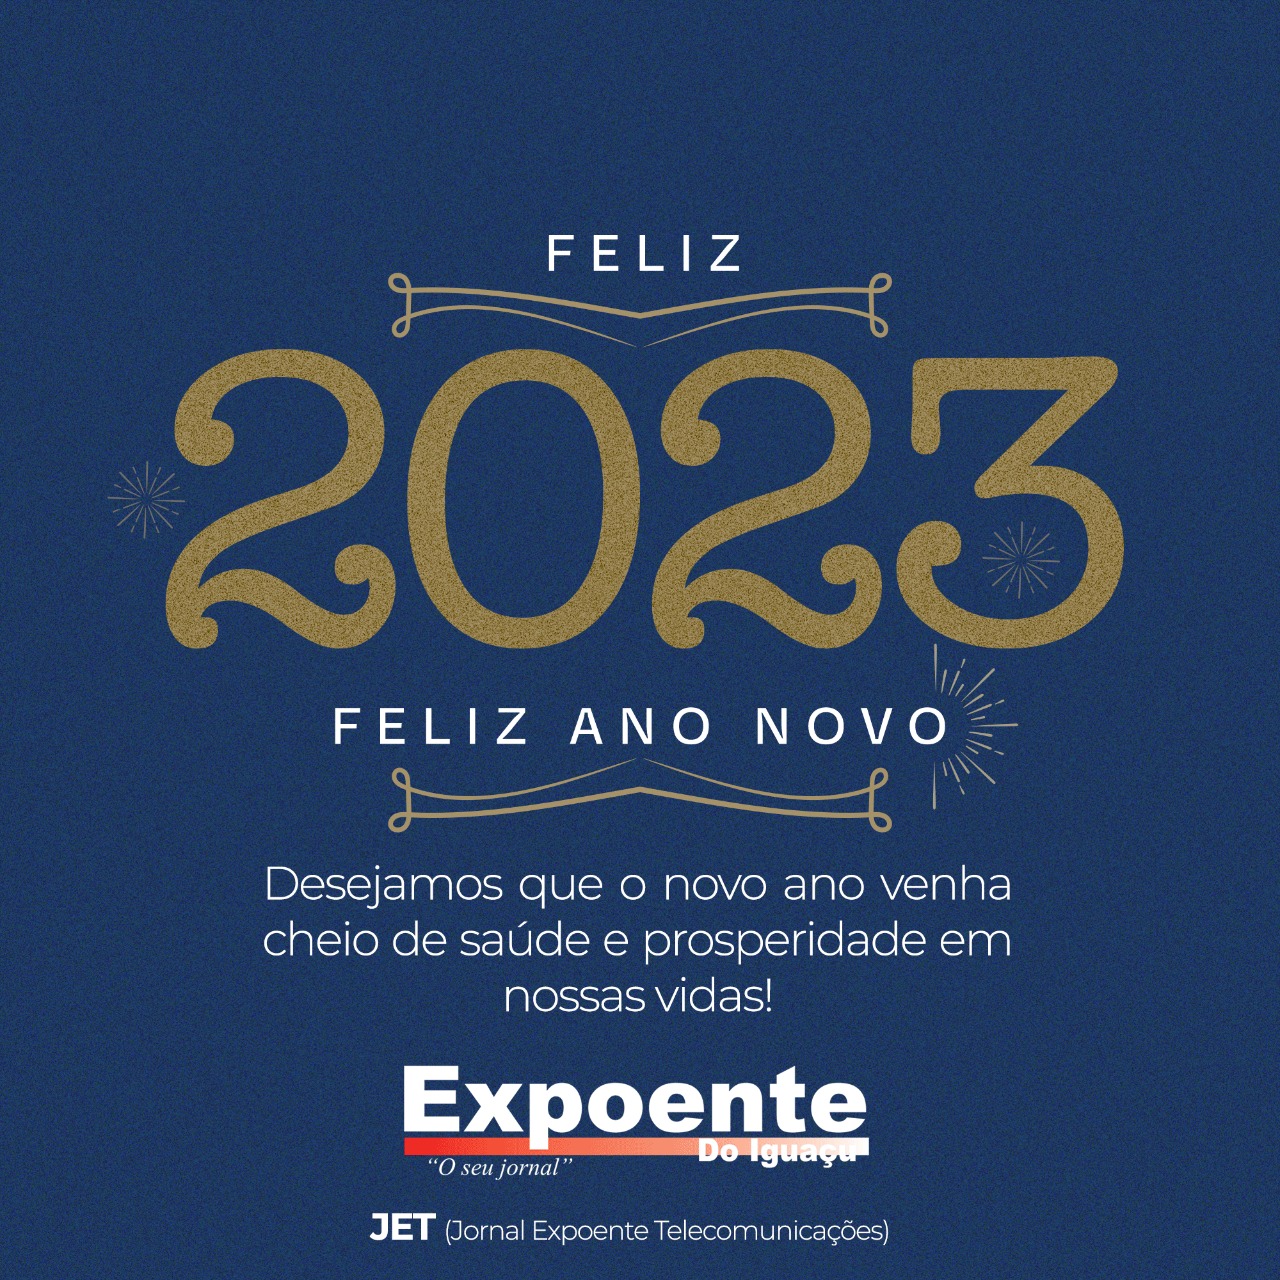 Img 20221231 Wa0003 - Jornal Expoente Do Iguaçu